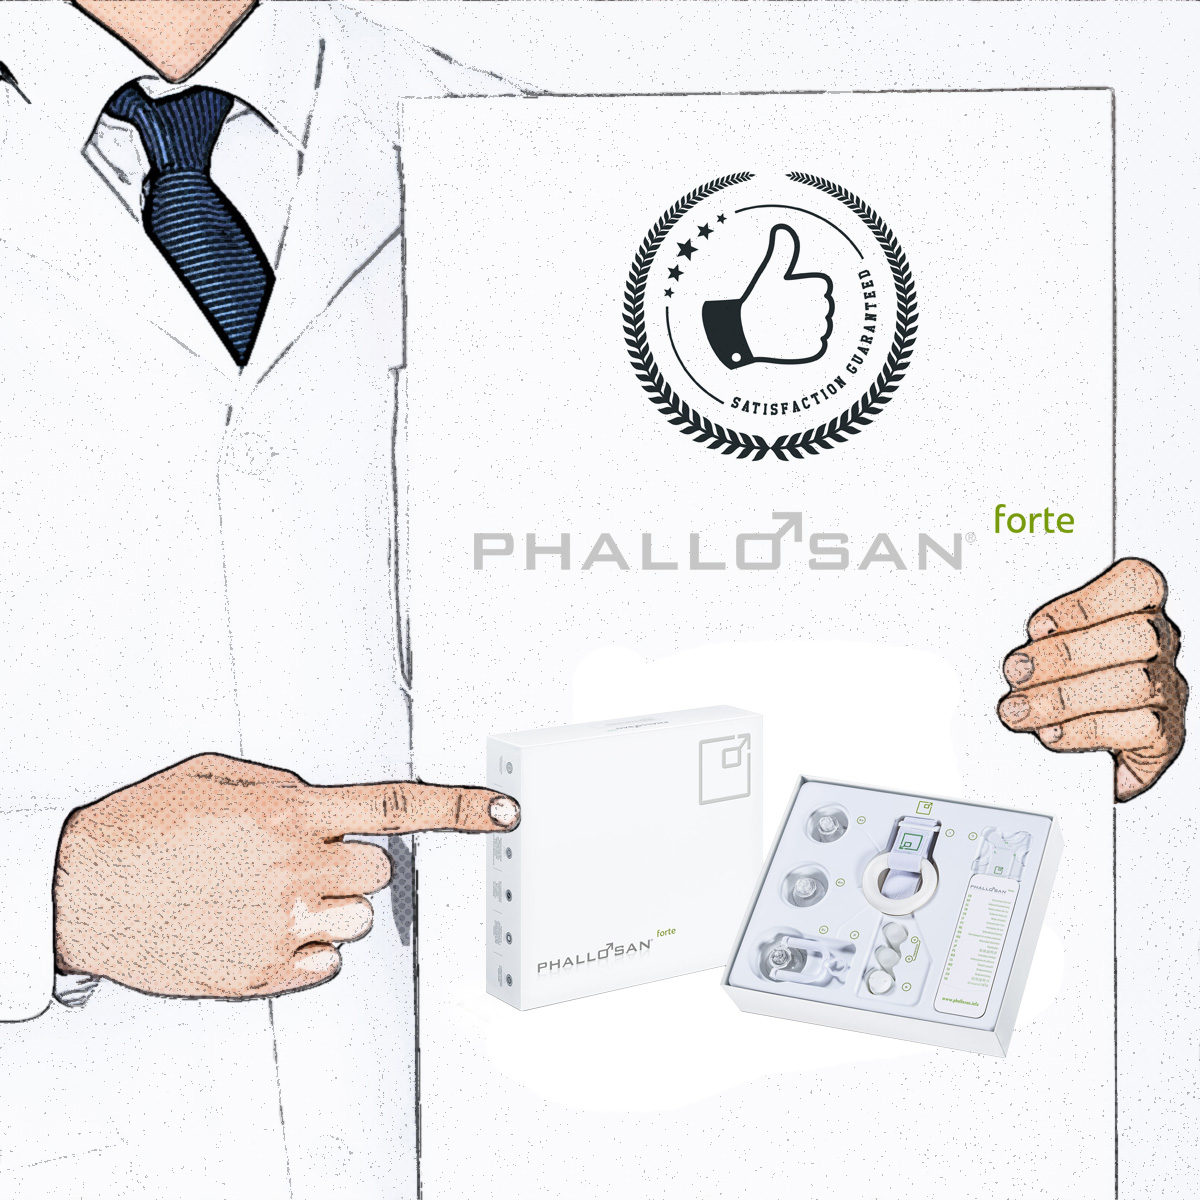 Introducing the PHALLOSAN stretcher